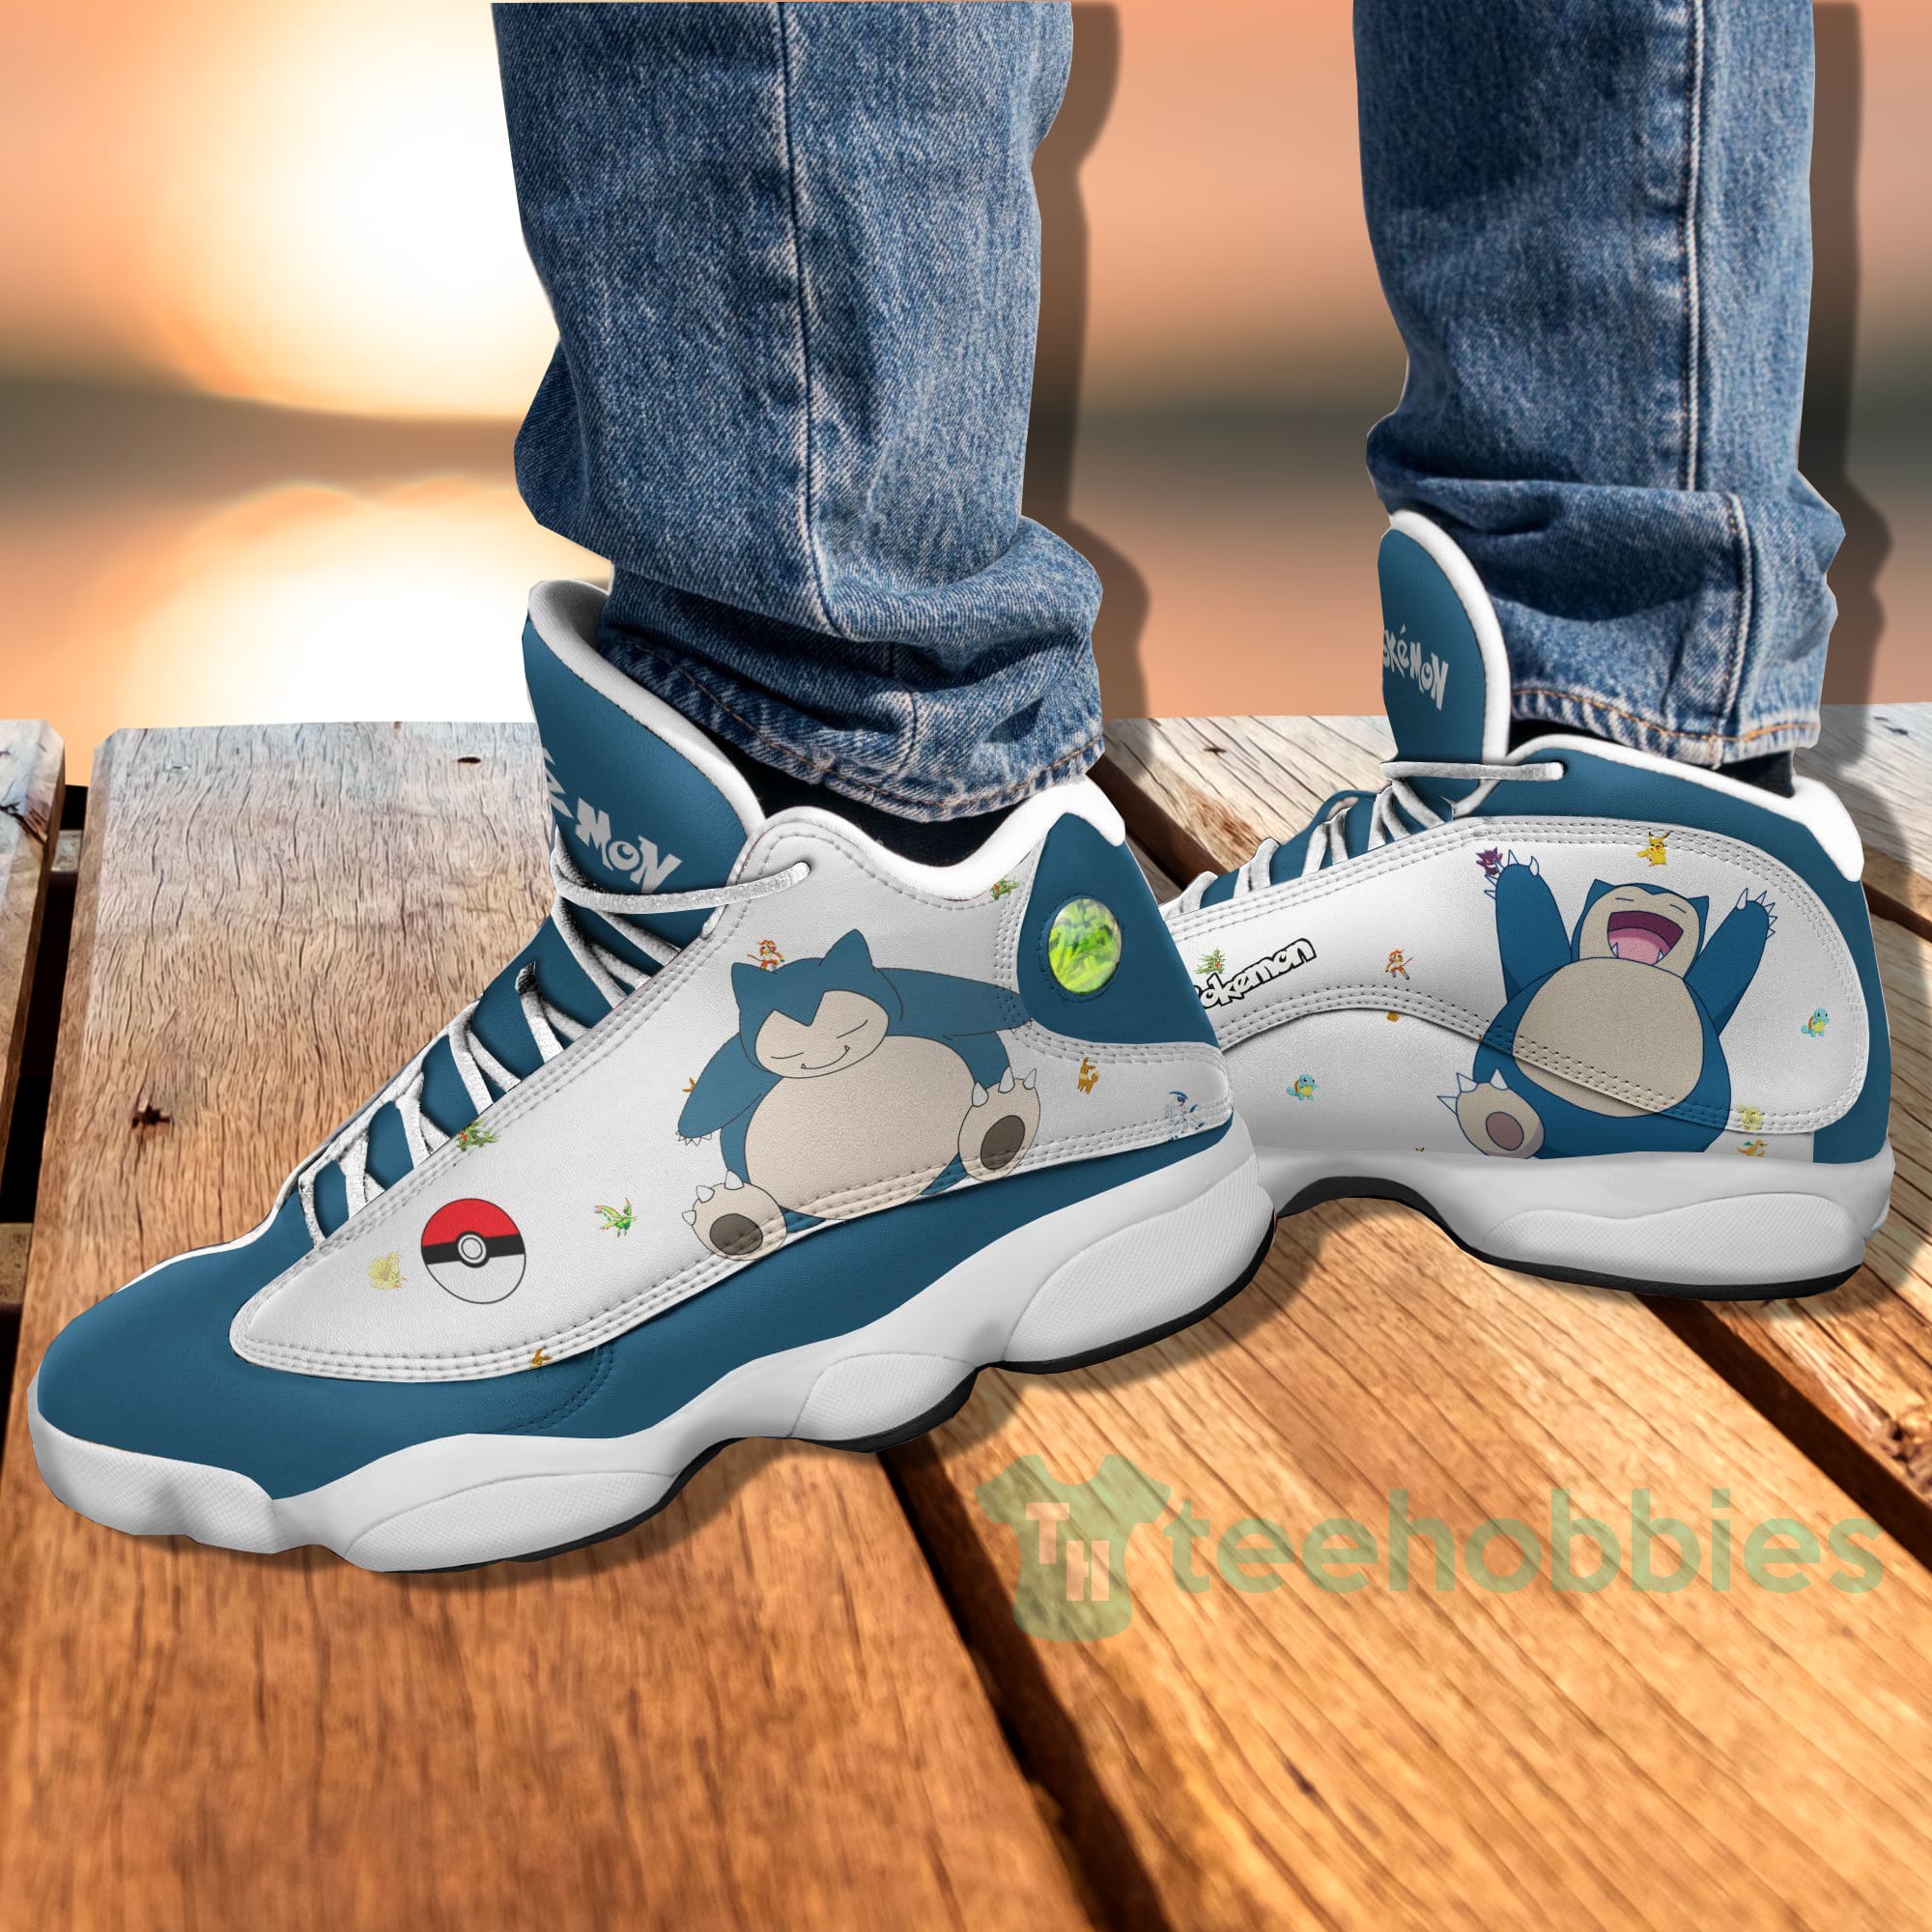 Men Nike Jordan Shoes, Model Name/Number: Snorlax Doremon, Size: 41 - 45